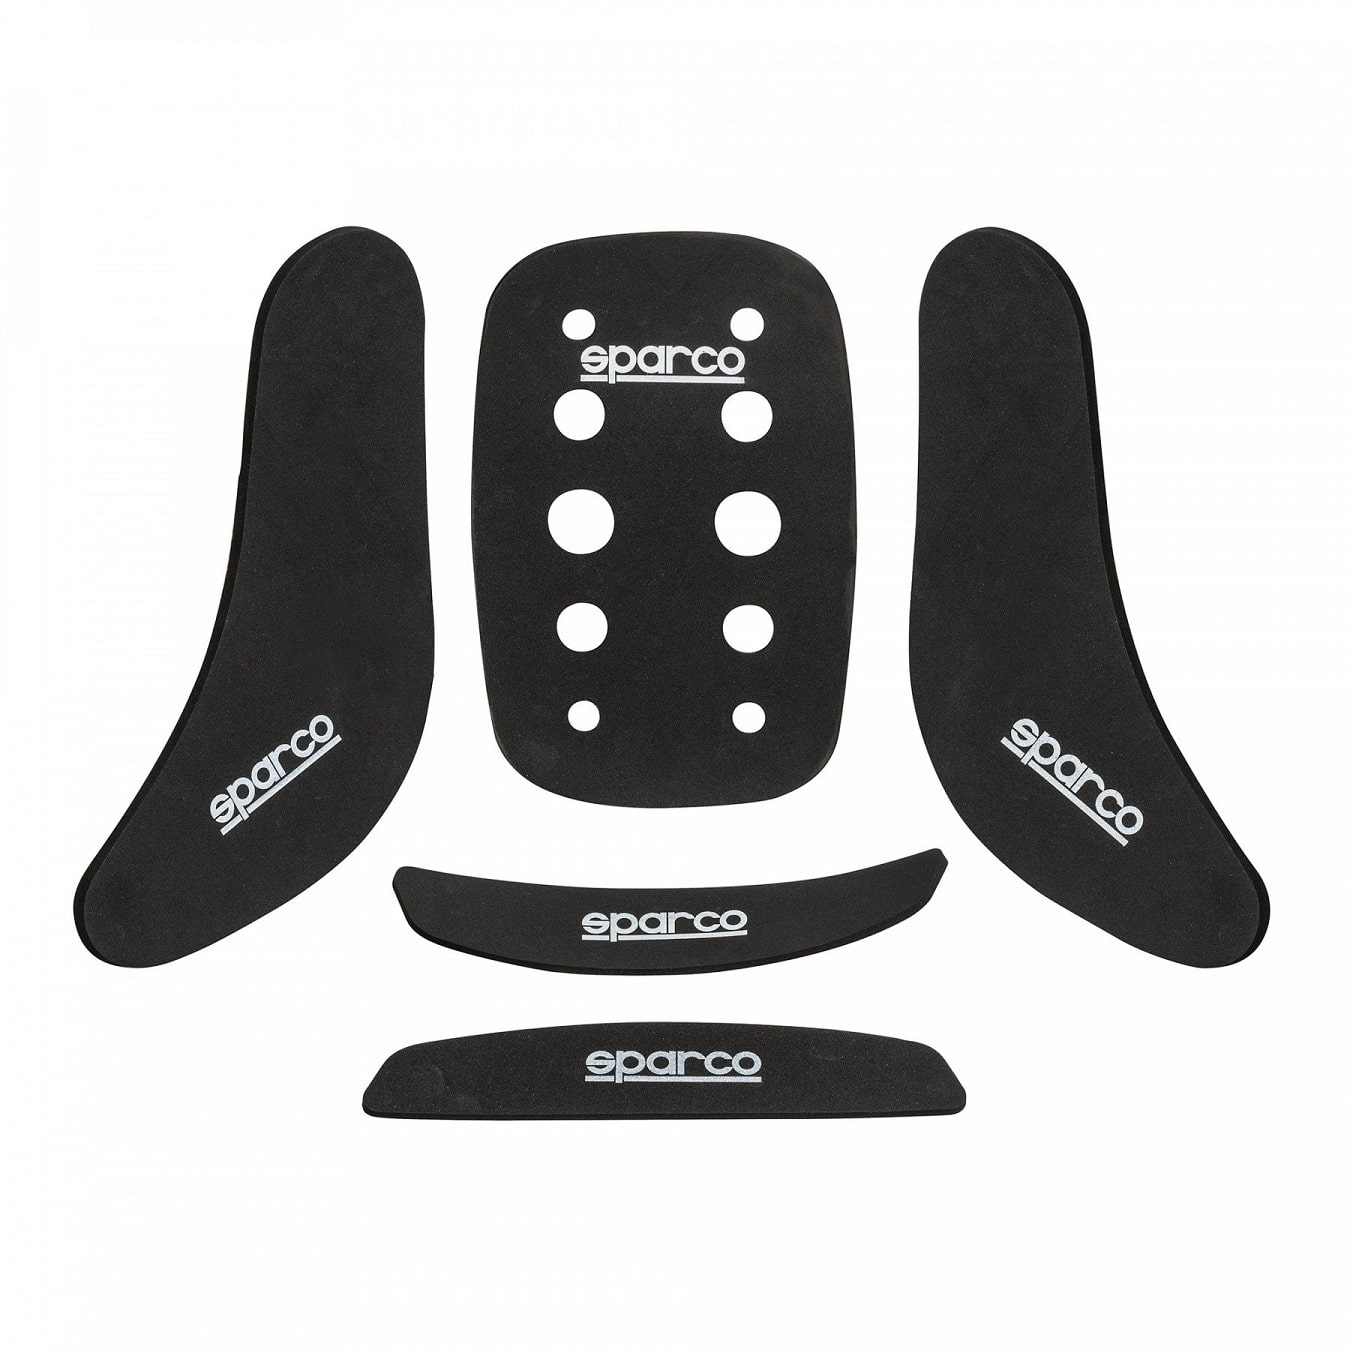 https://www.oreca-store.com/media/catalog/product/s/p/sparco-adhesive-protectors-for-karting-seats-0.jpg